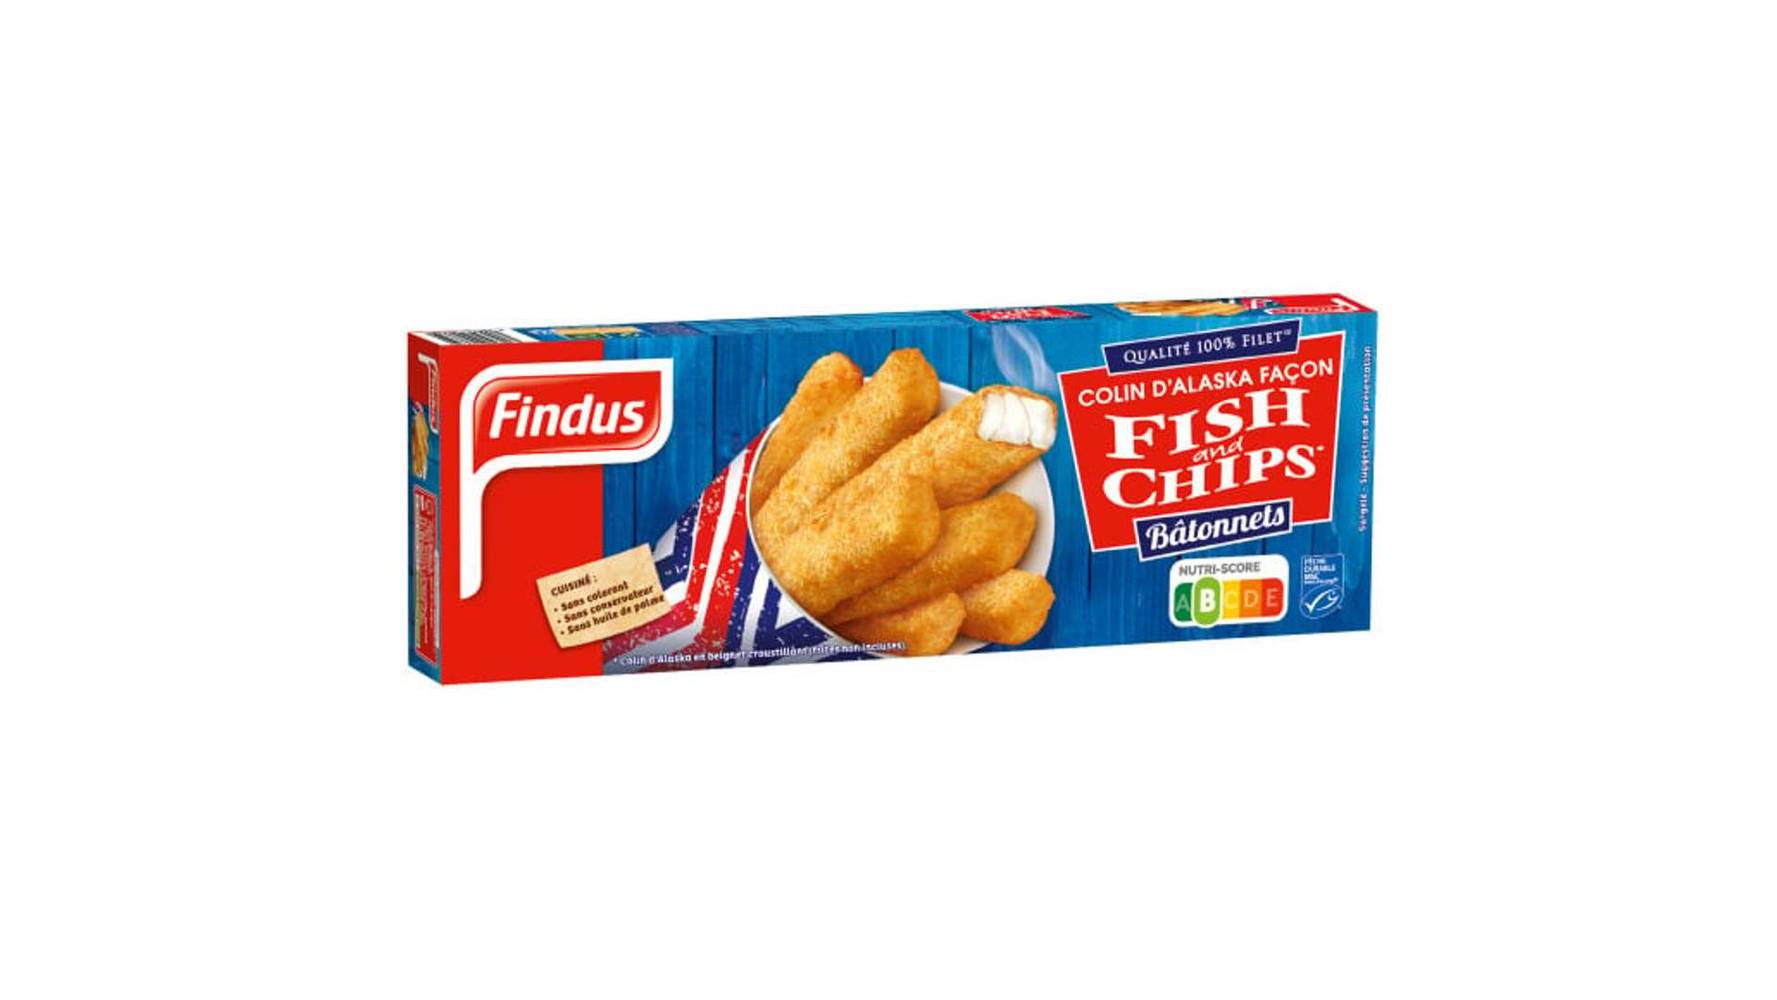 Findus - Colin d'alaska façon fish and chips (3 pièces)